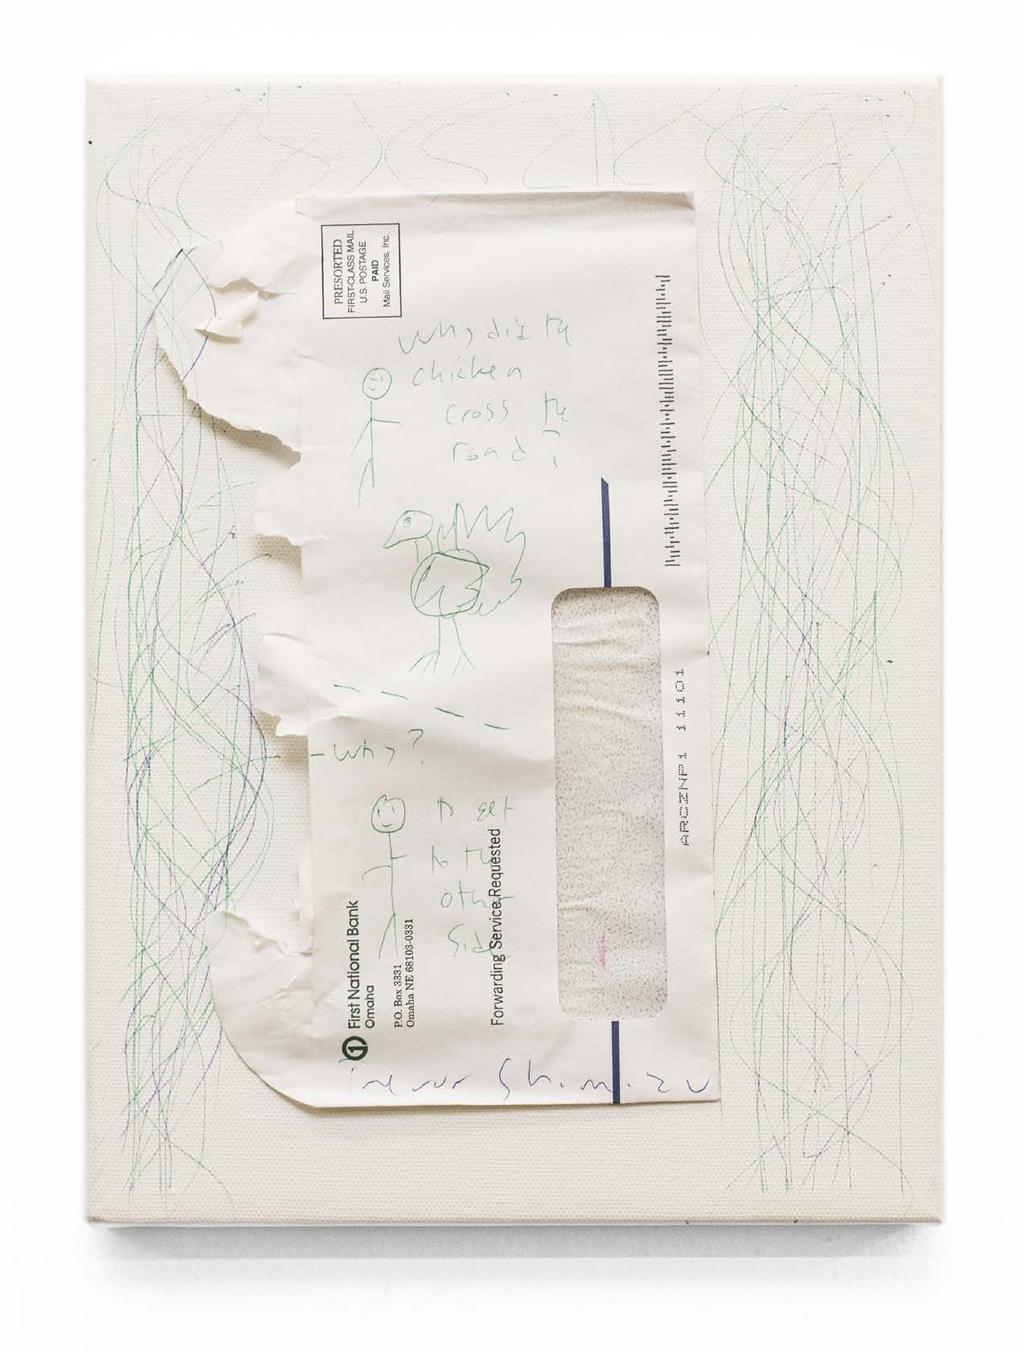 Trevor Shimizu Knock knock #2, 2015 pen, envelope, canvas.